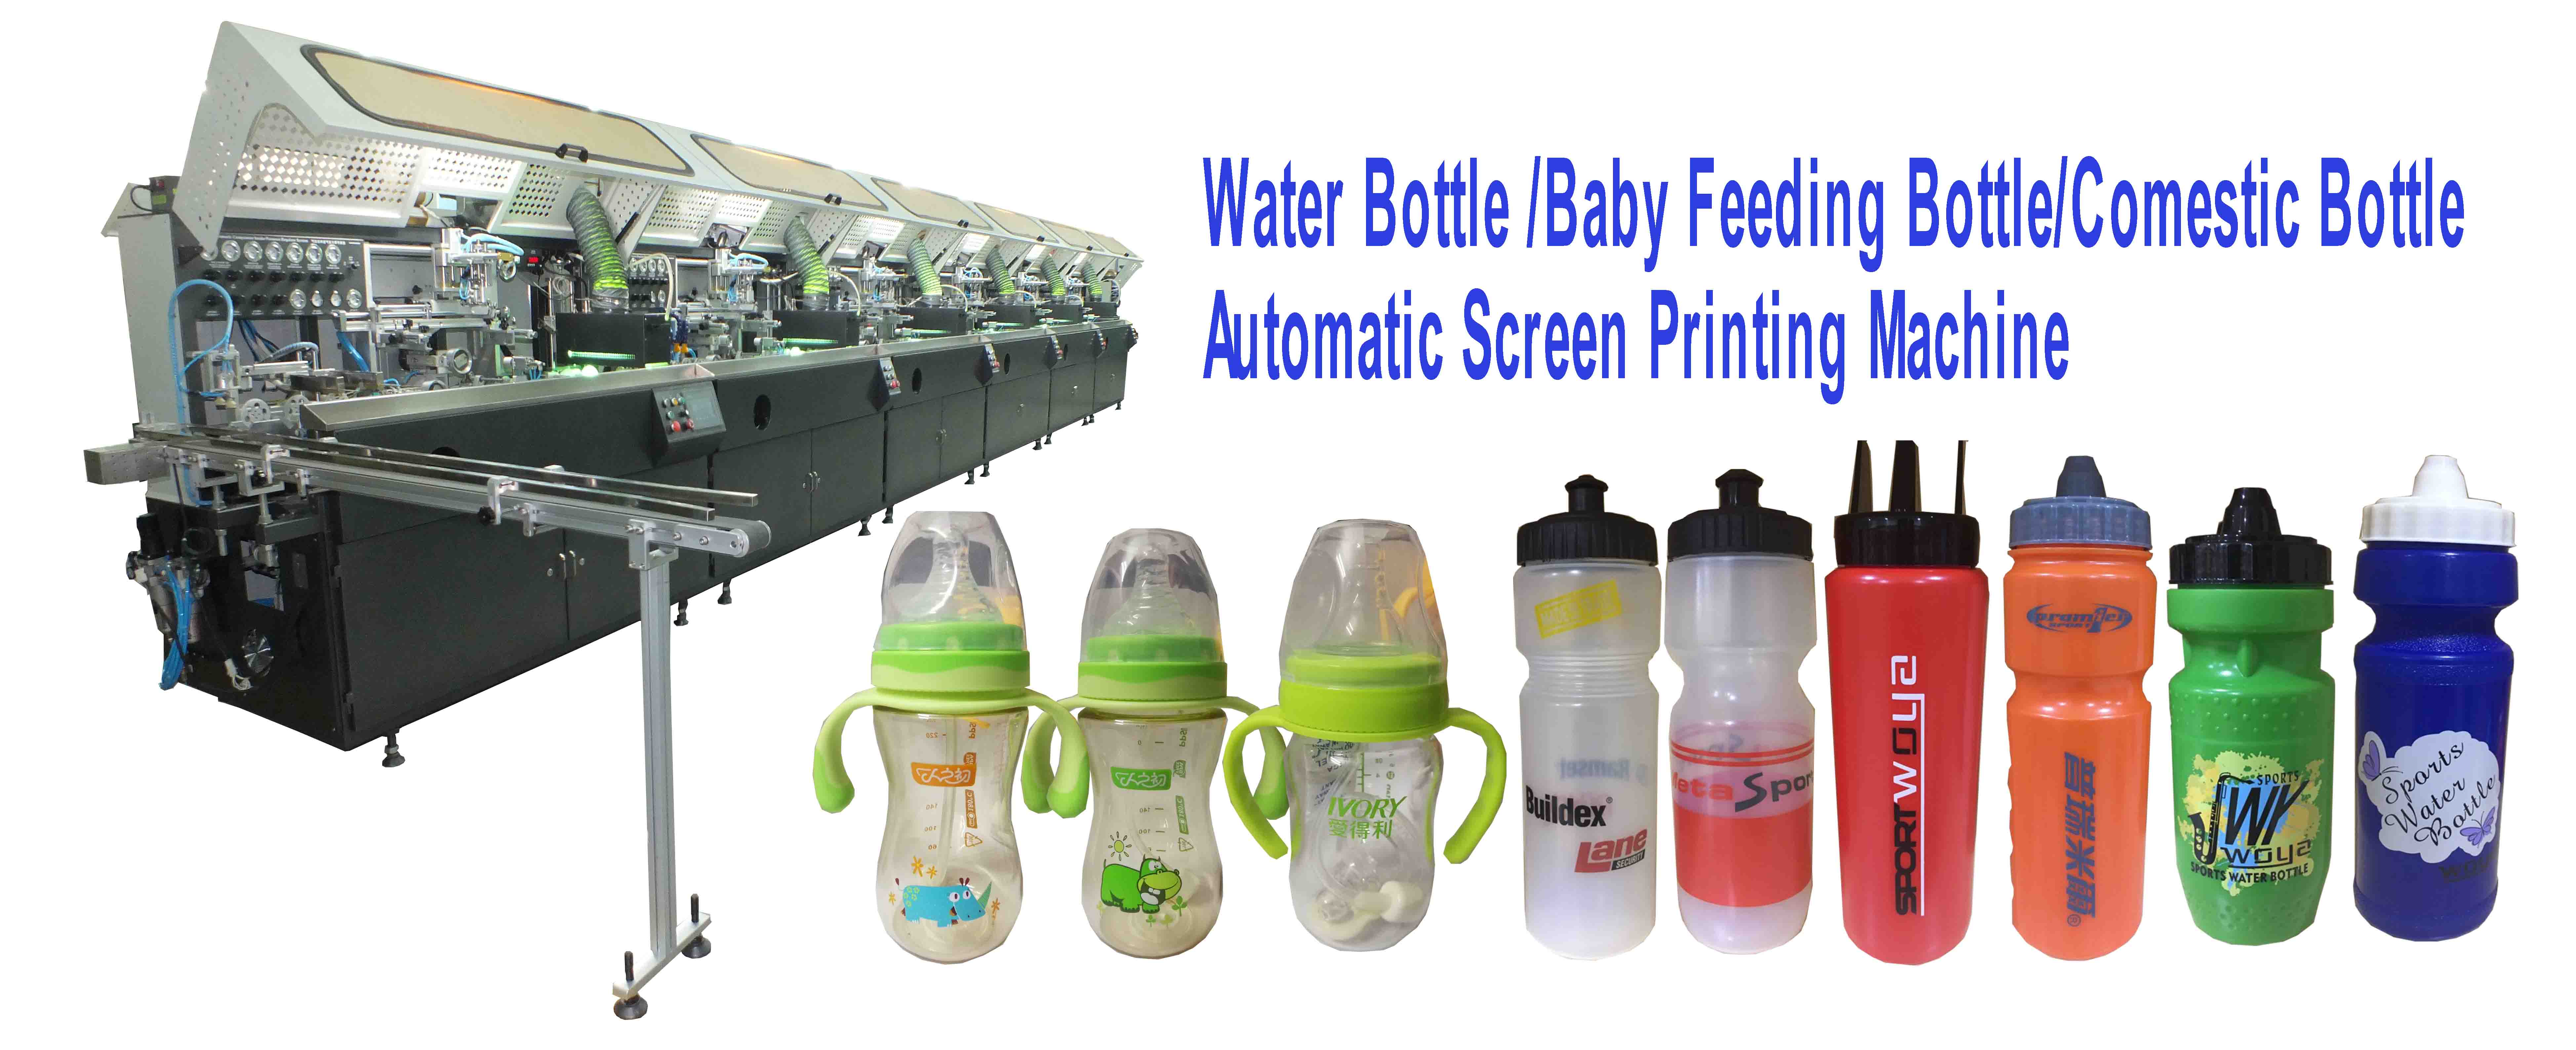 Water Bottle, Baby Feeding Bottle,Comestic Bottle Automatic Screen Printing Machine